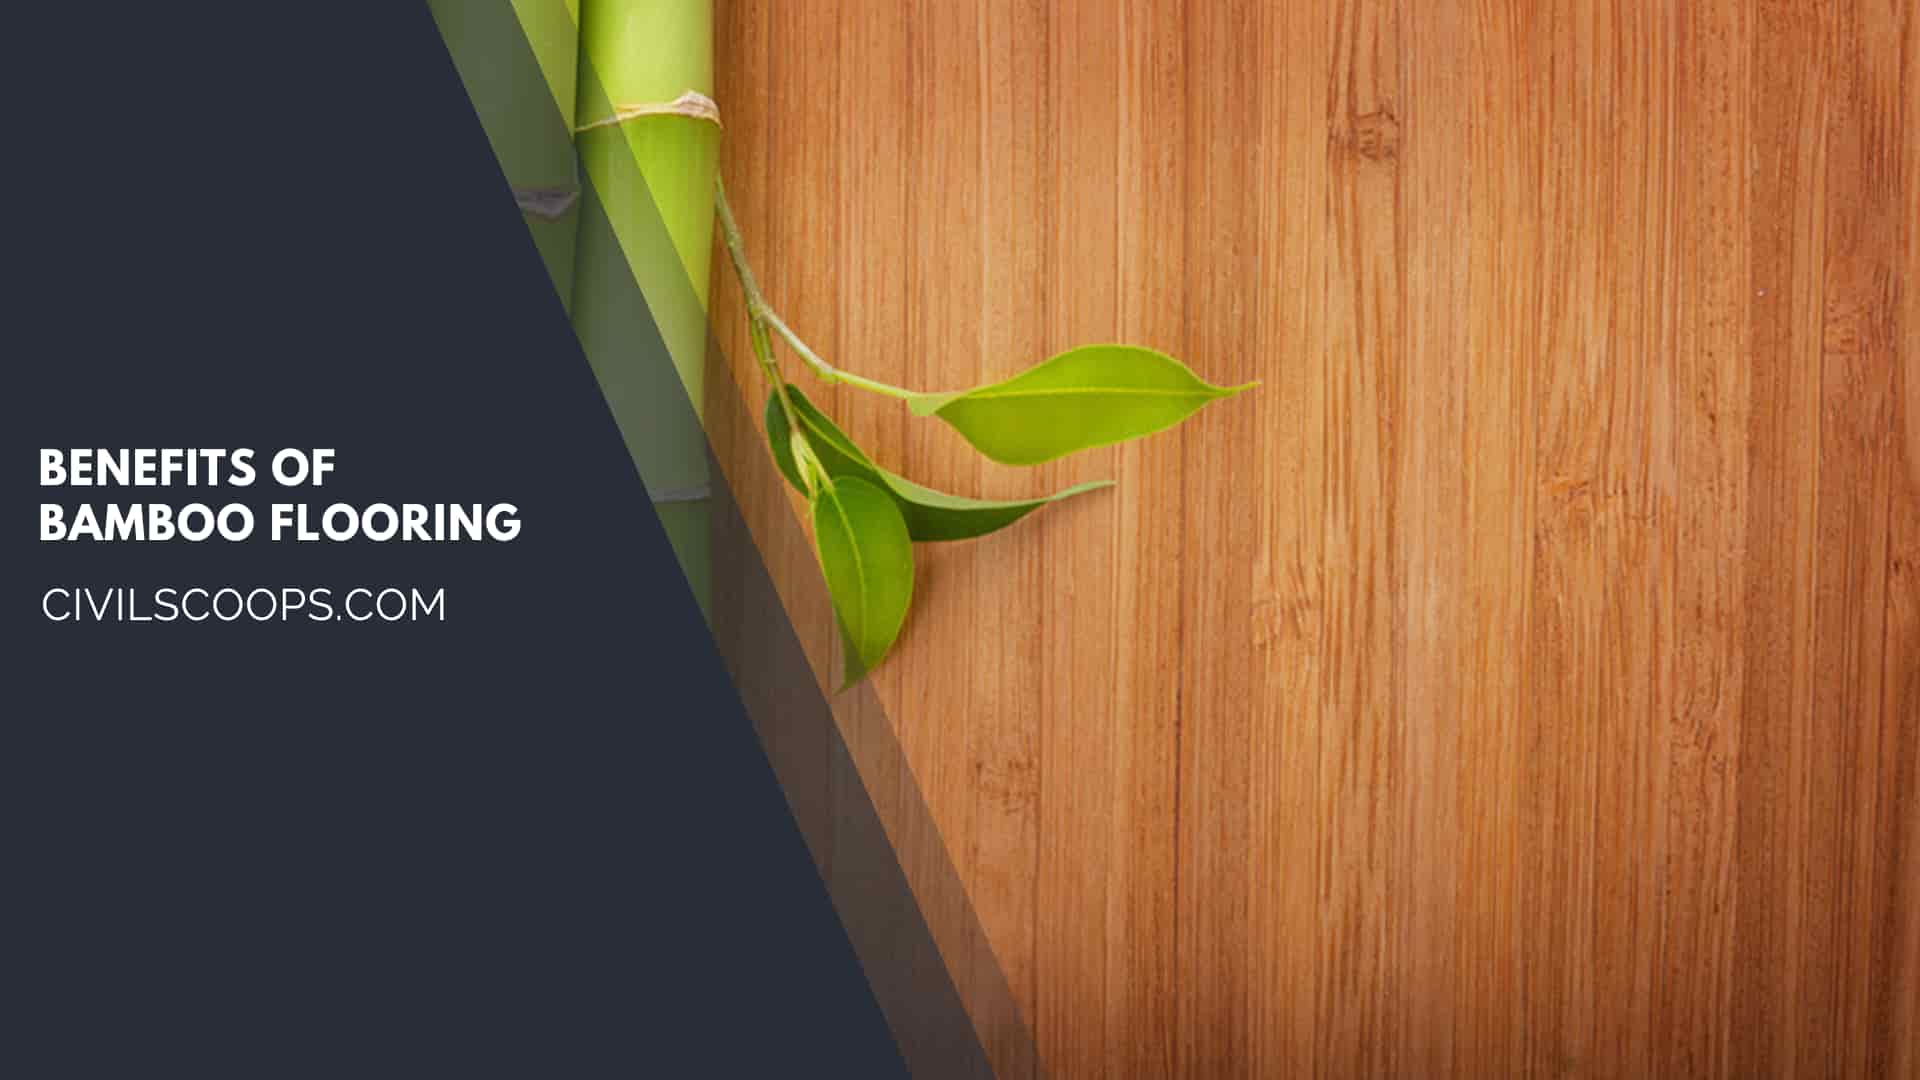 Benefits of Bamboo Flooring